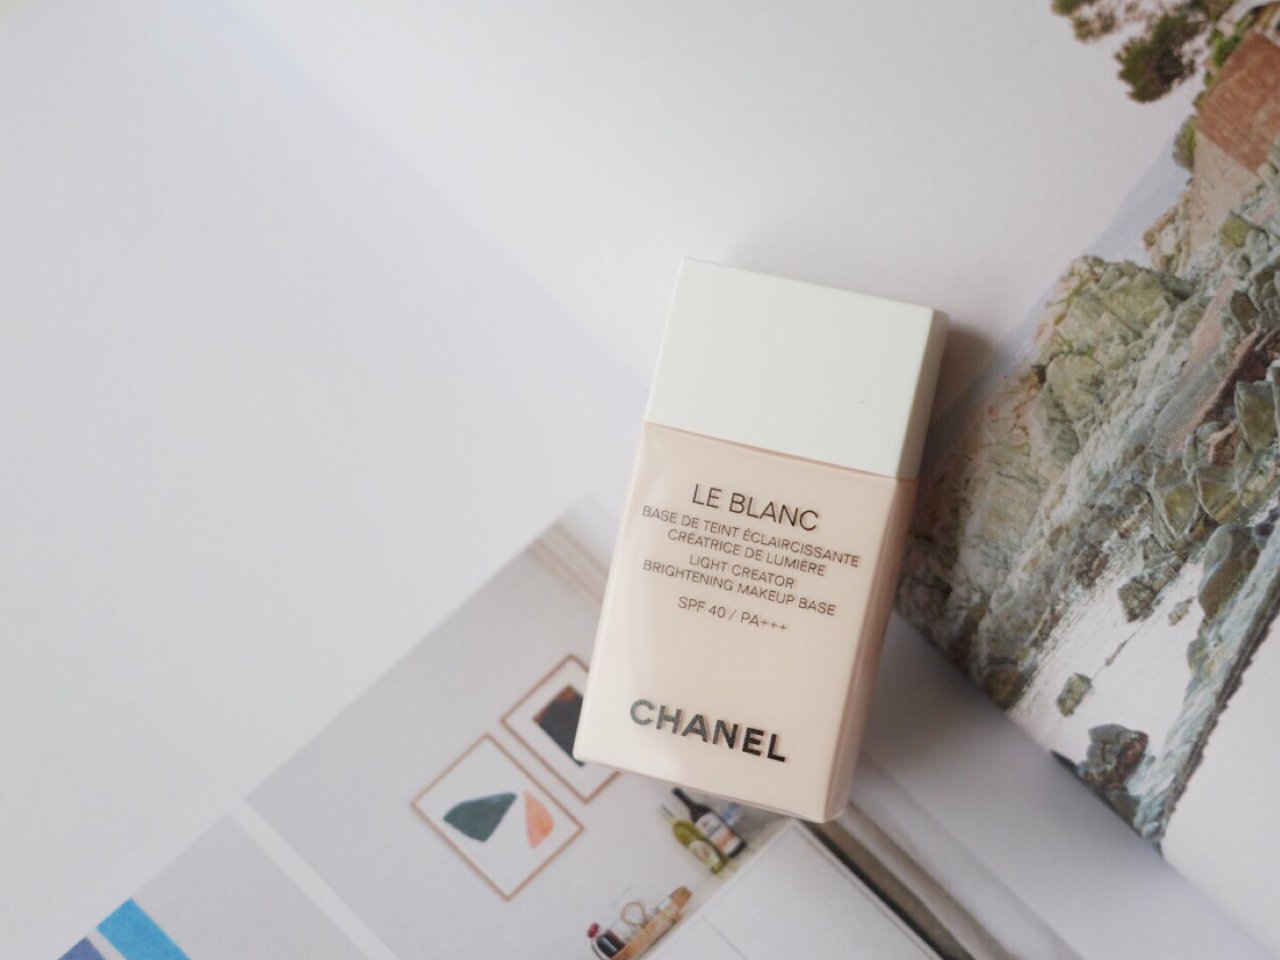 Le blanc,Chanel 香奈儿